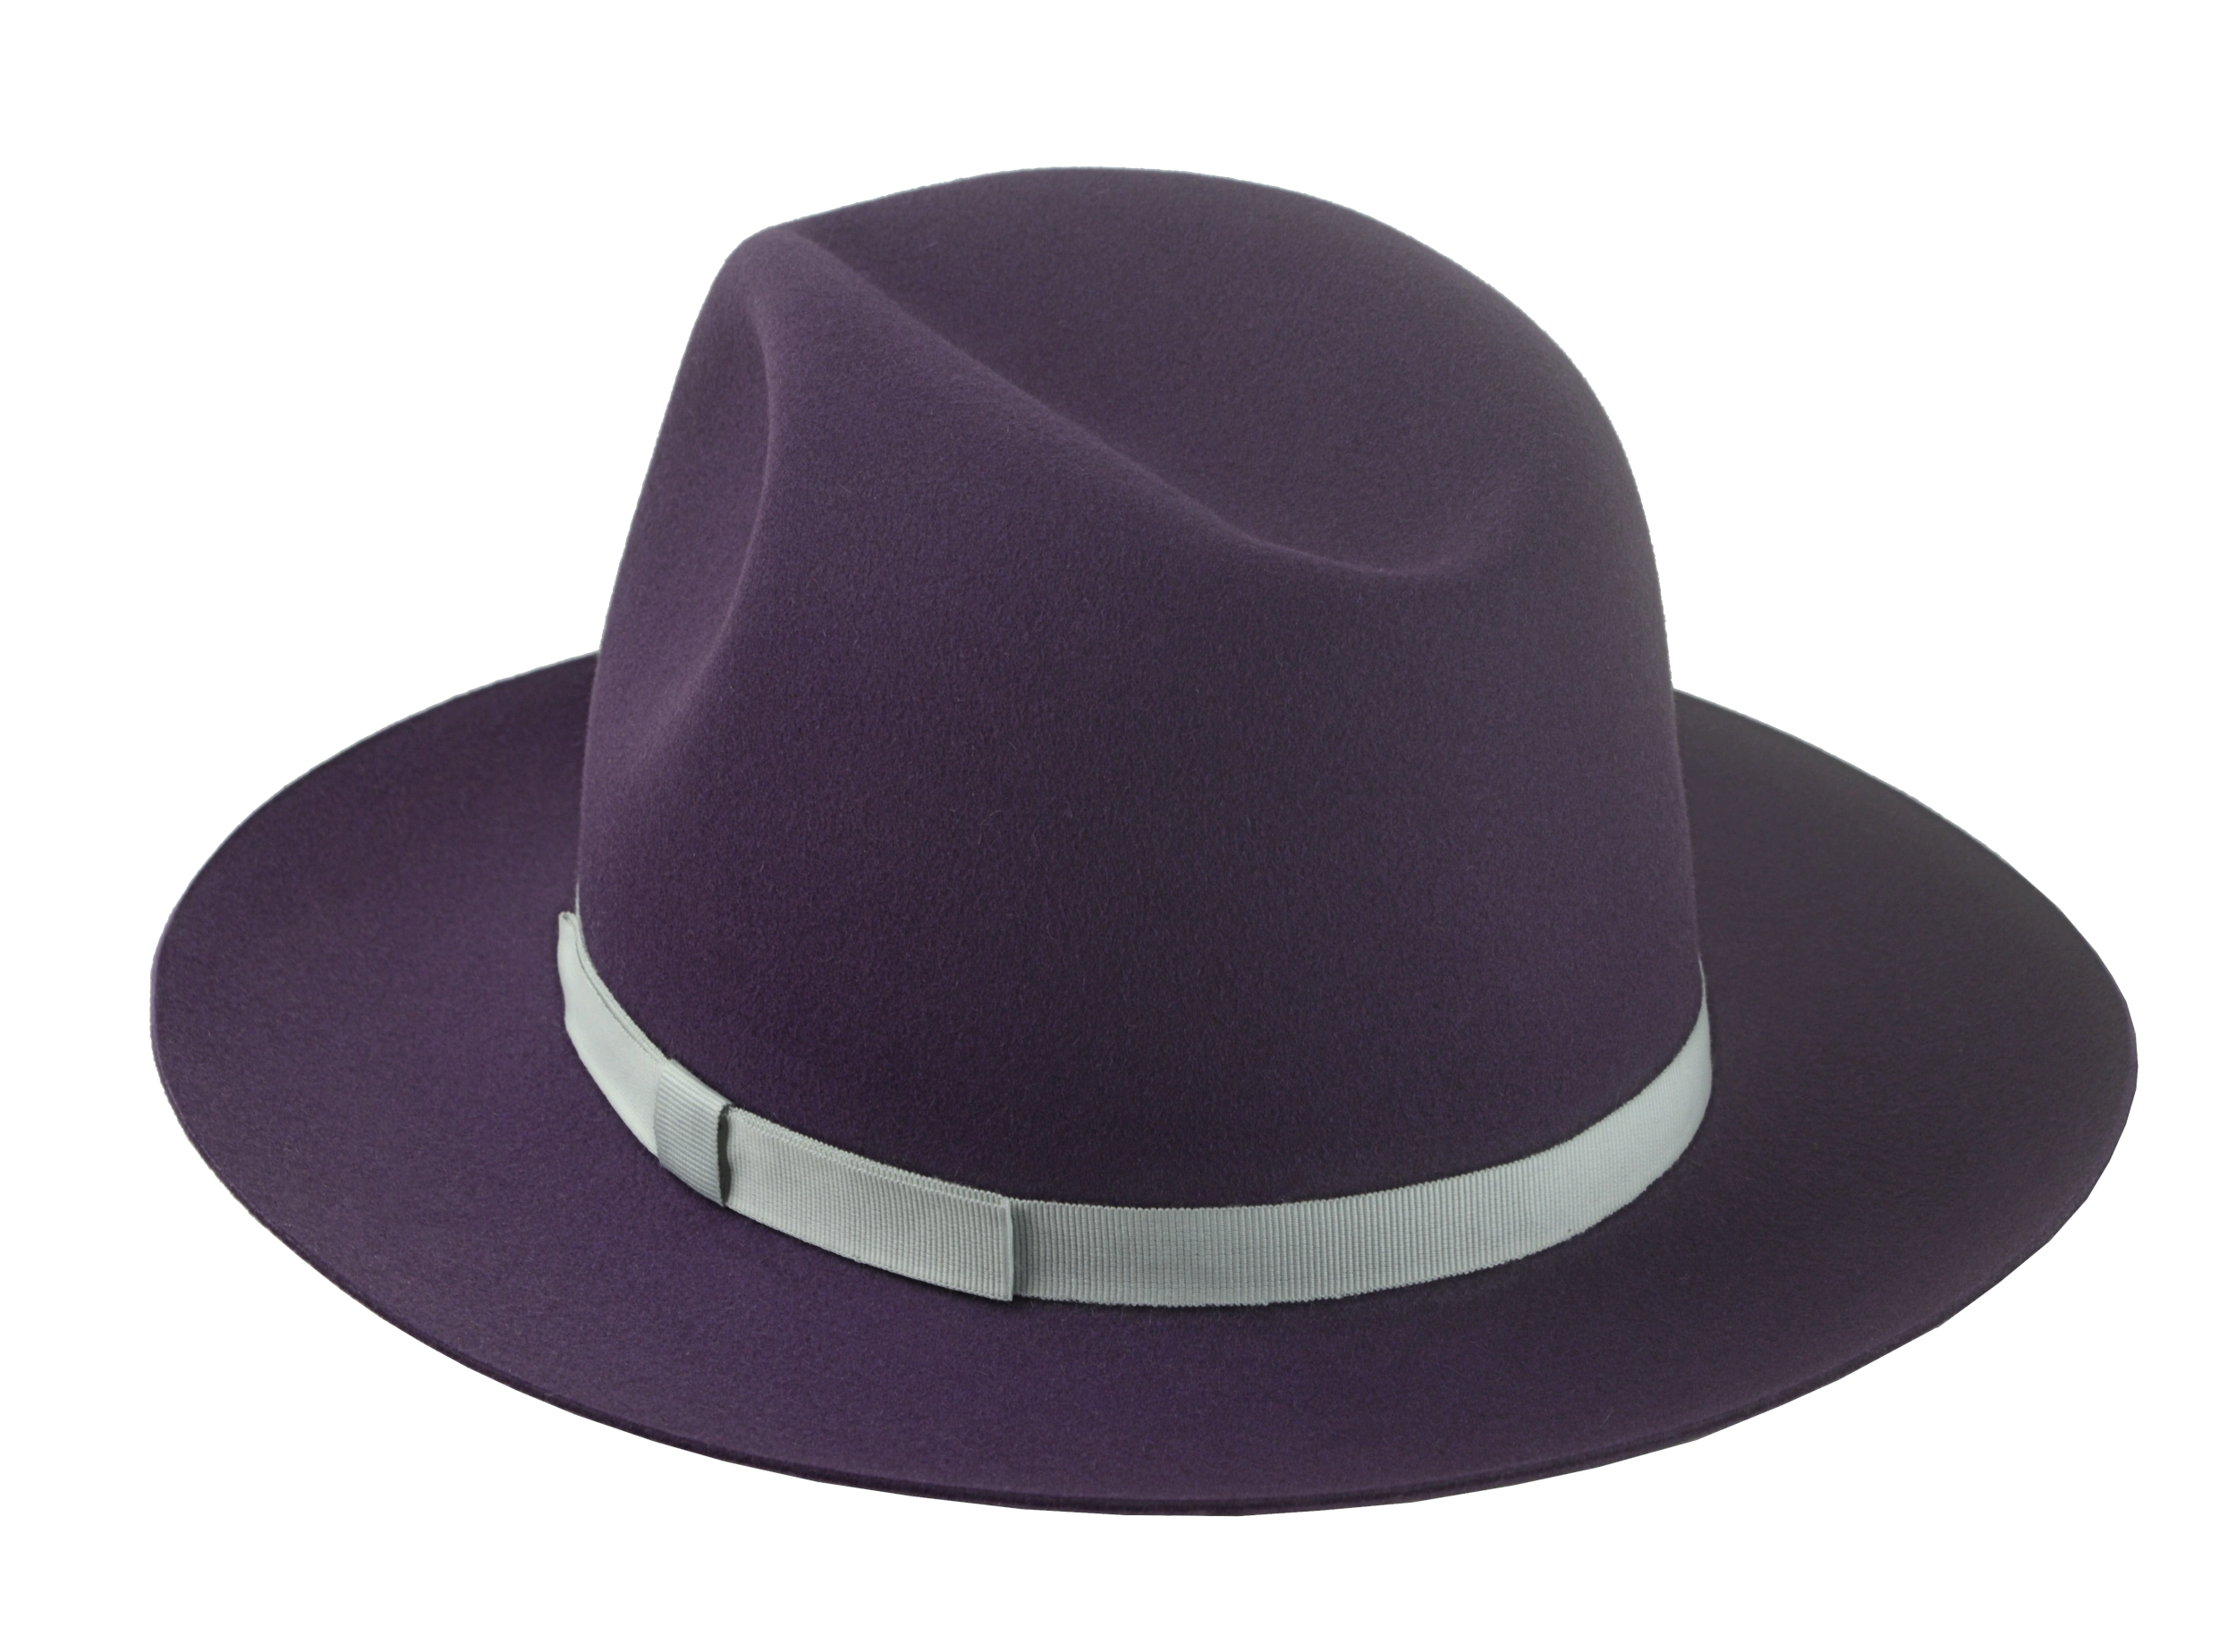 The VETERAN - Beaver Fur Felt Wide Brim Fedora For Men in Plum | Agnoulita Quality Custom Hats   3